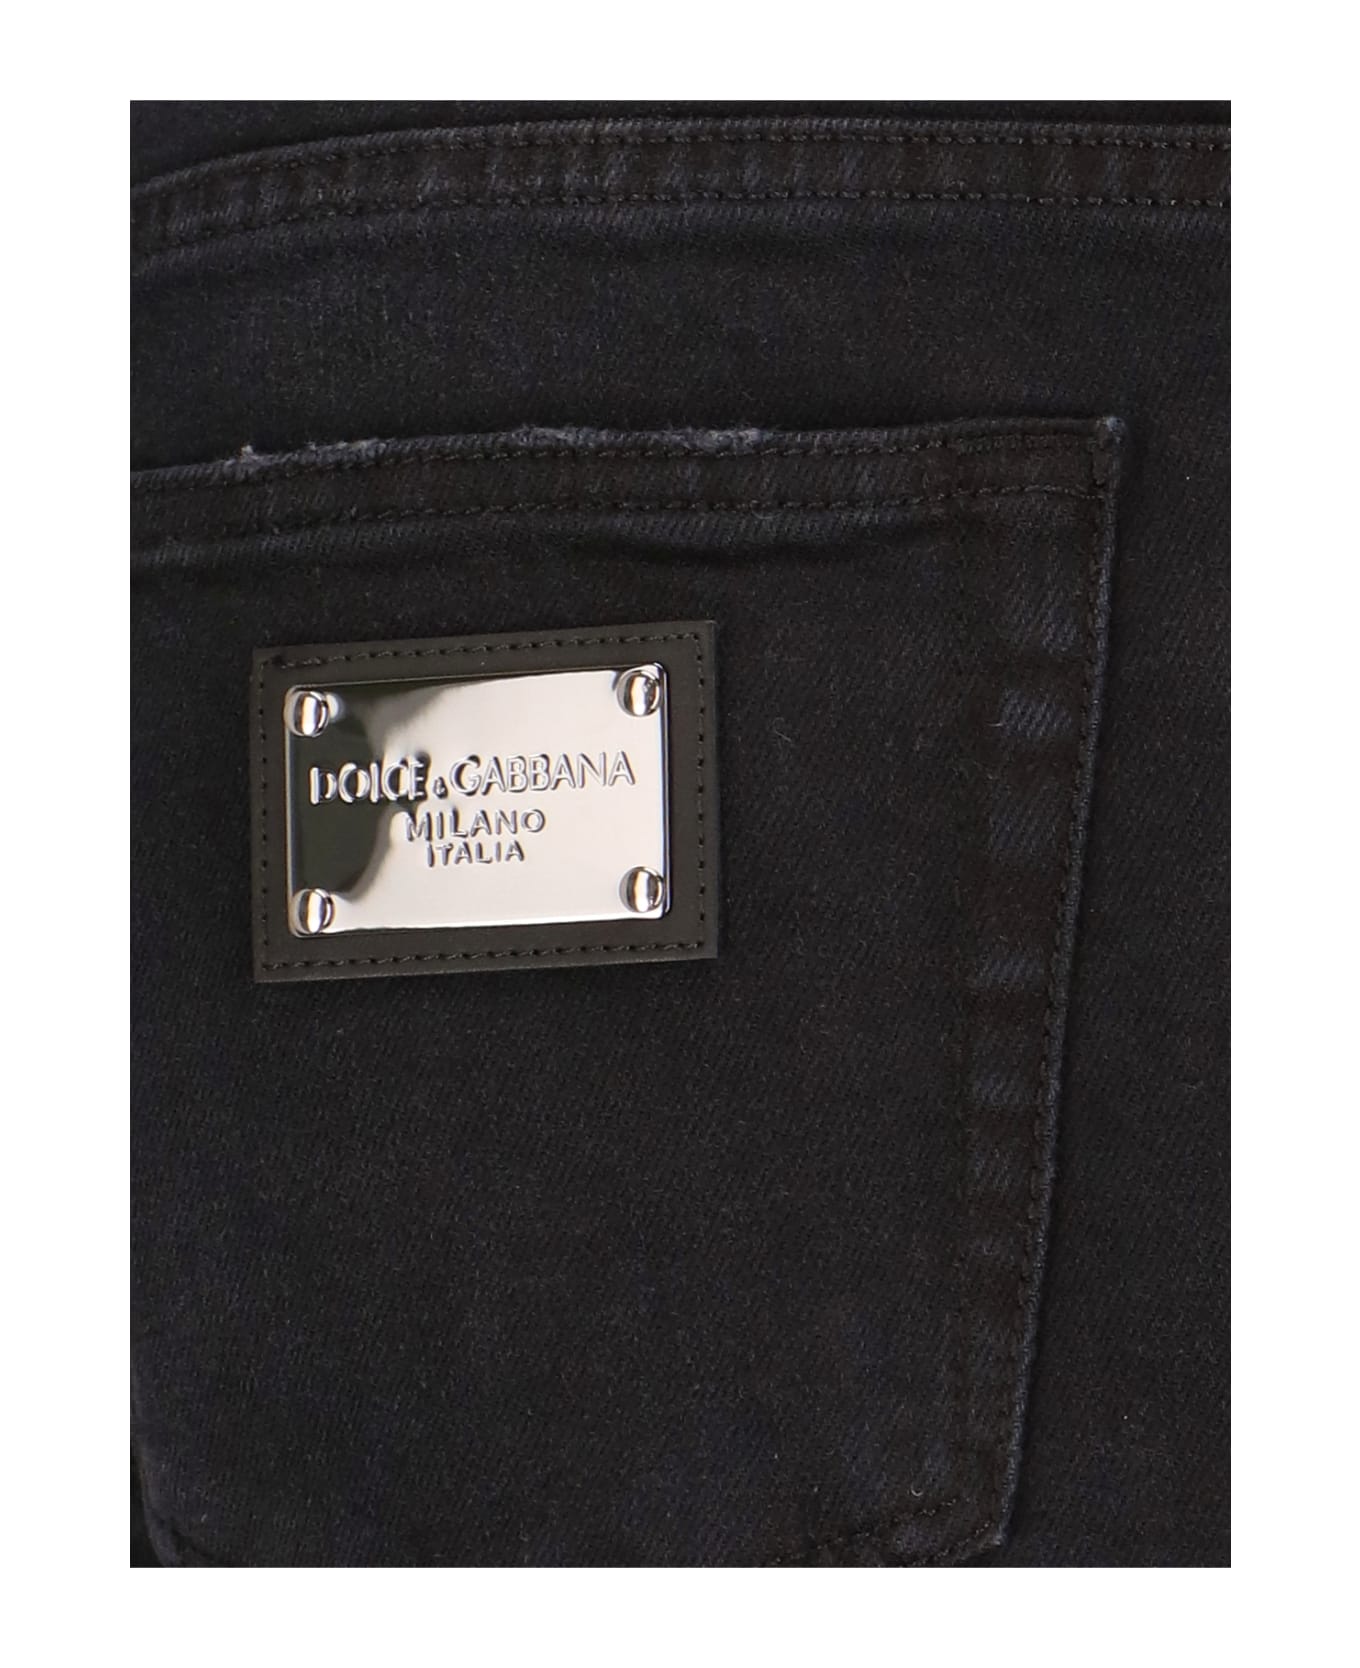 Dolce & Gabbana Slim Jeans - Black デニム